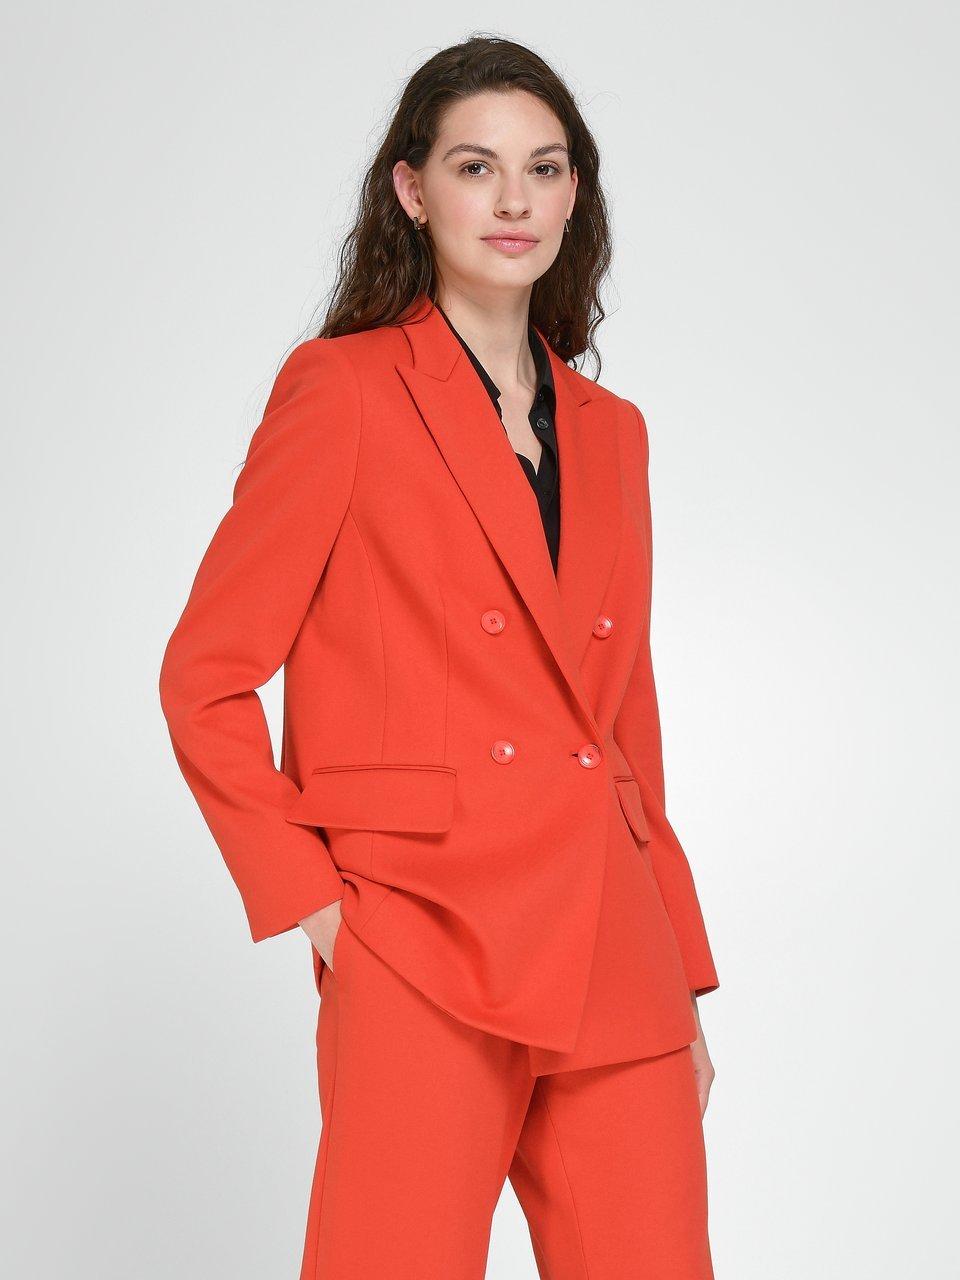 Fadenmeister Berlin - Jersey blazer in tweerijmodel